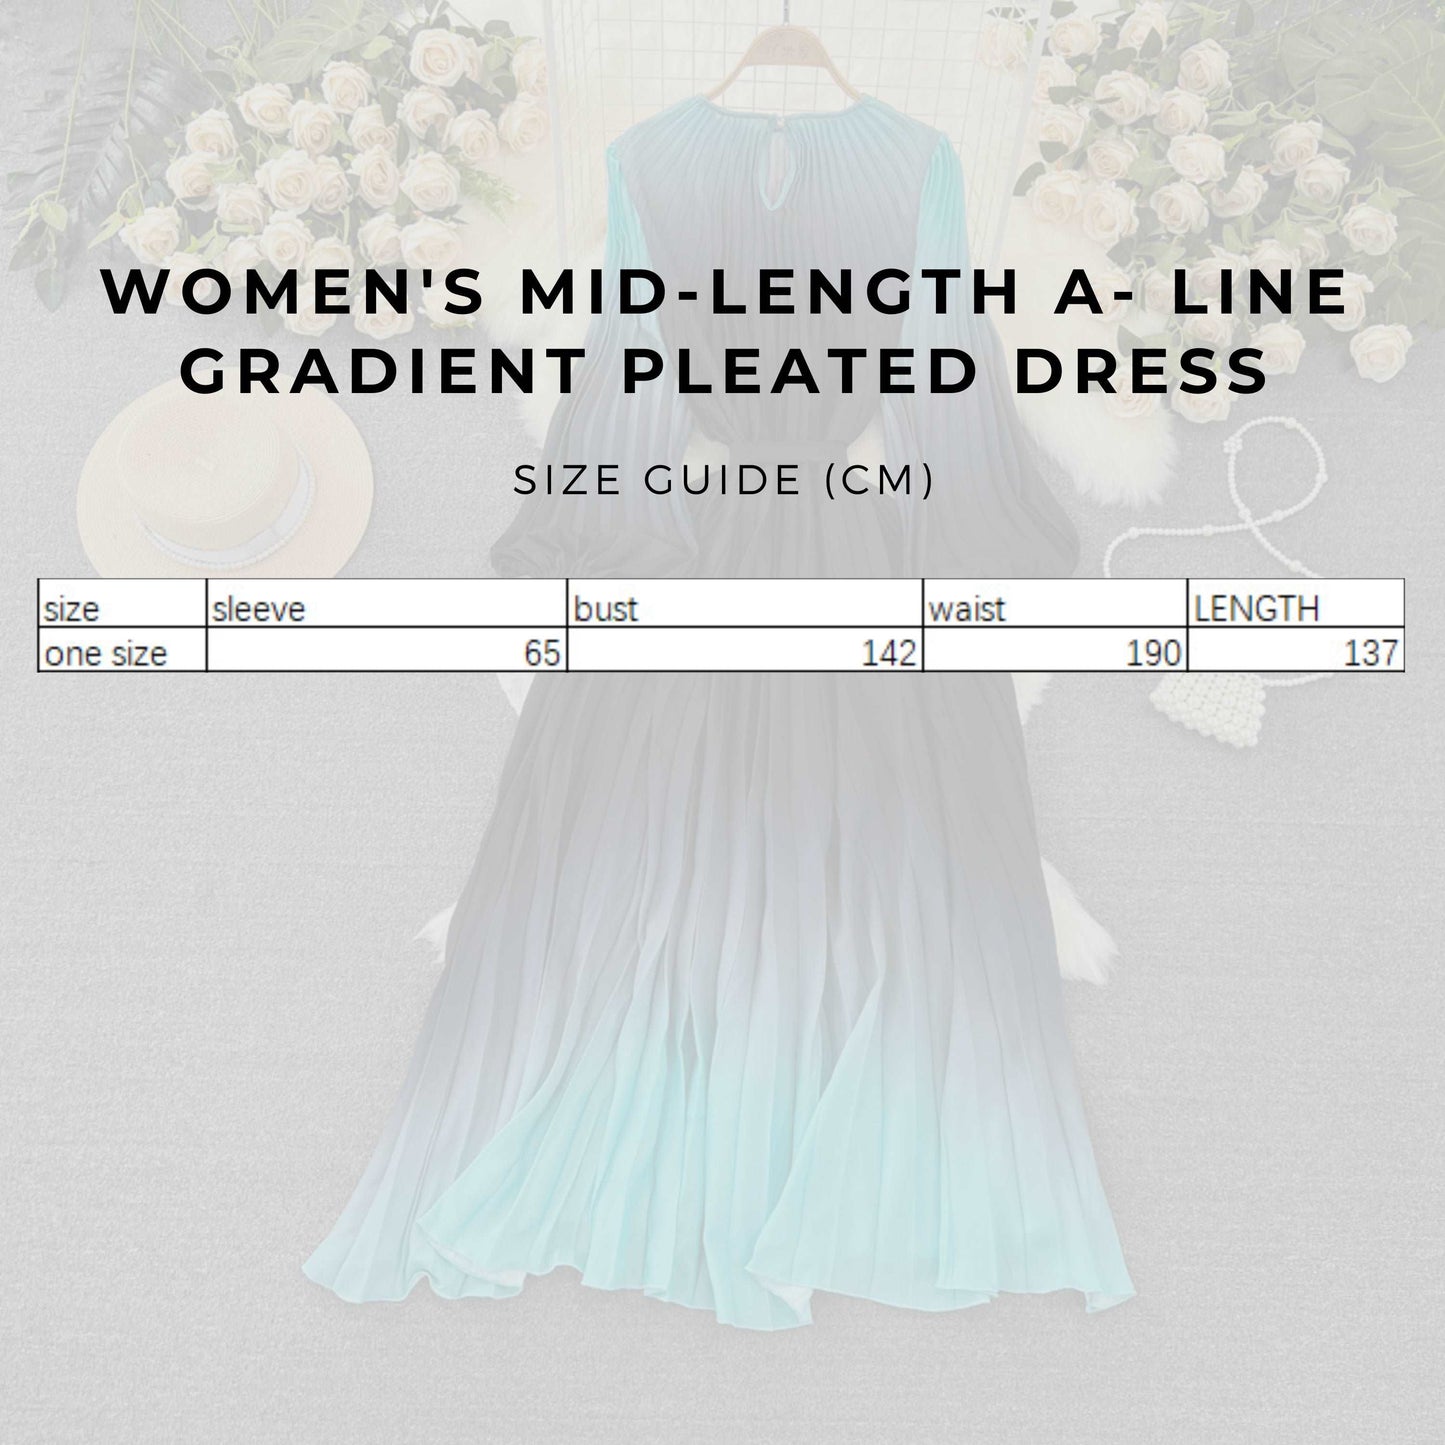 Women's Mid-length A- Line Gradient Pleated Dress